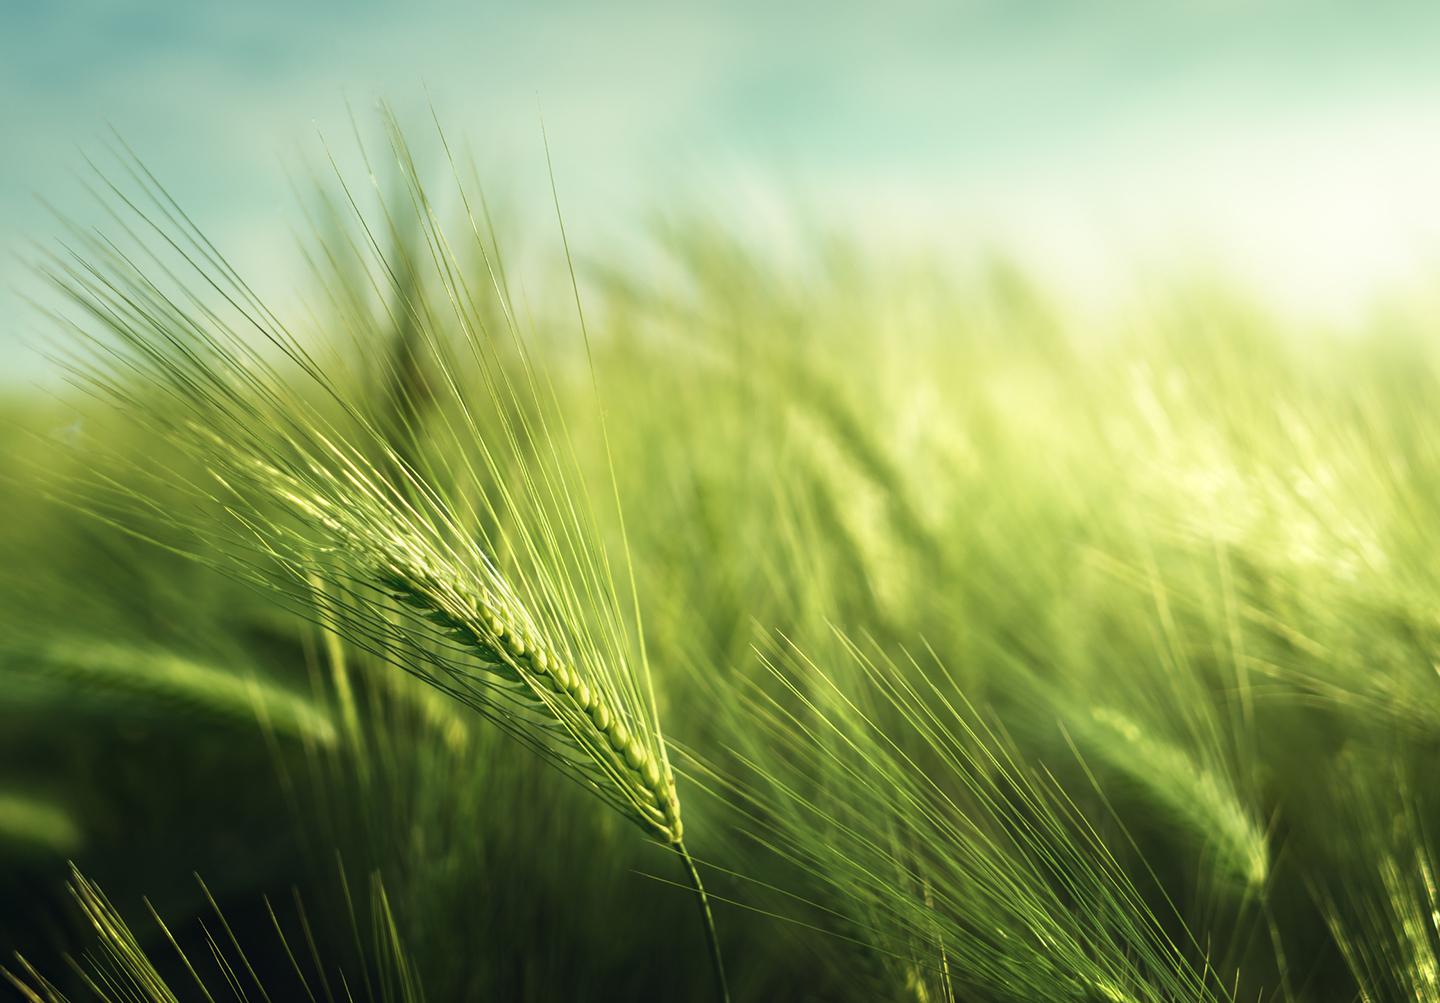 Sustainable wheat field landscape